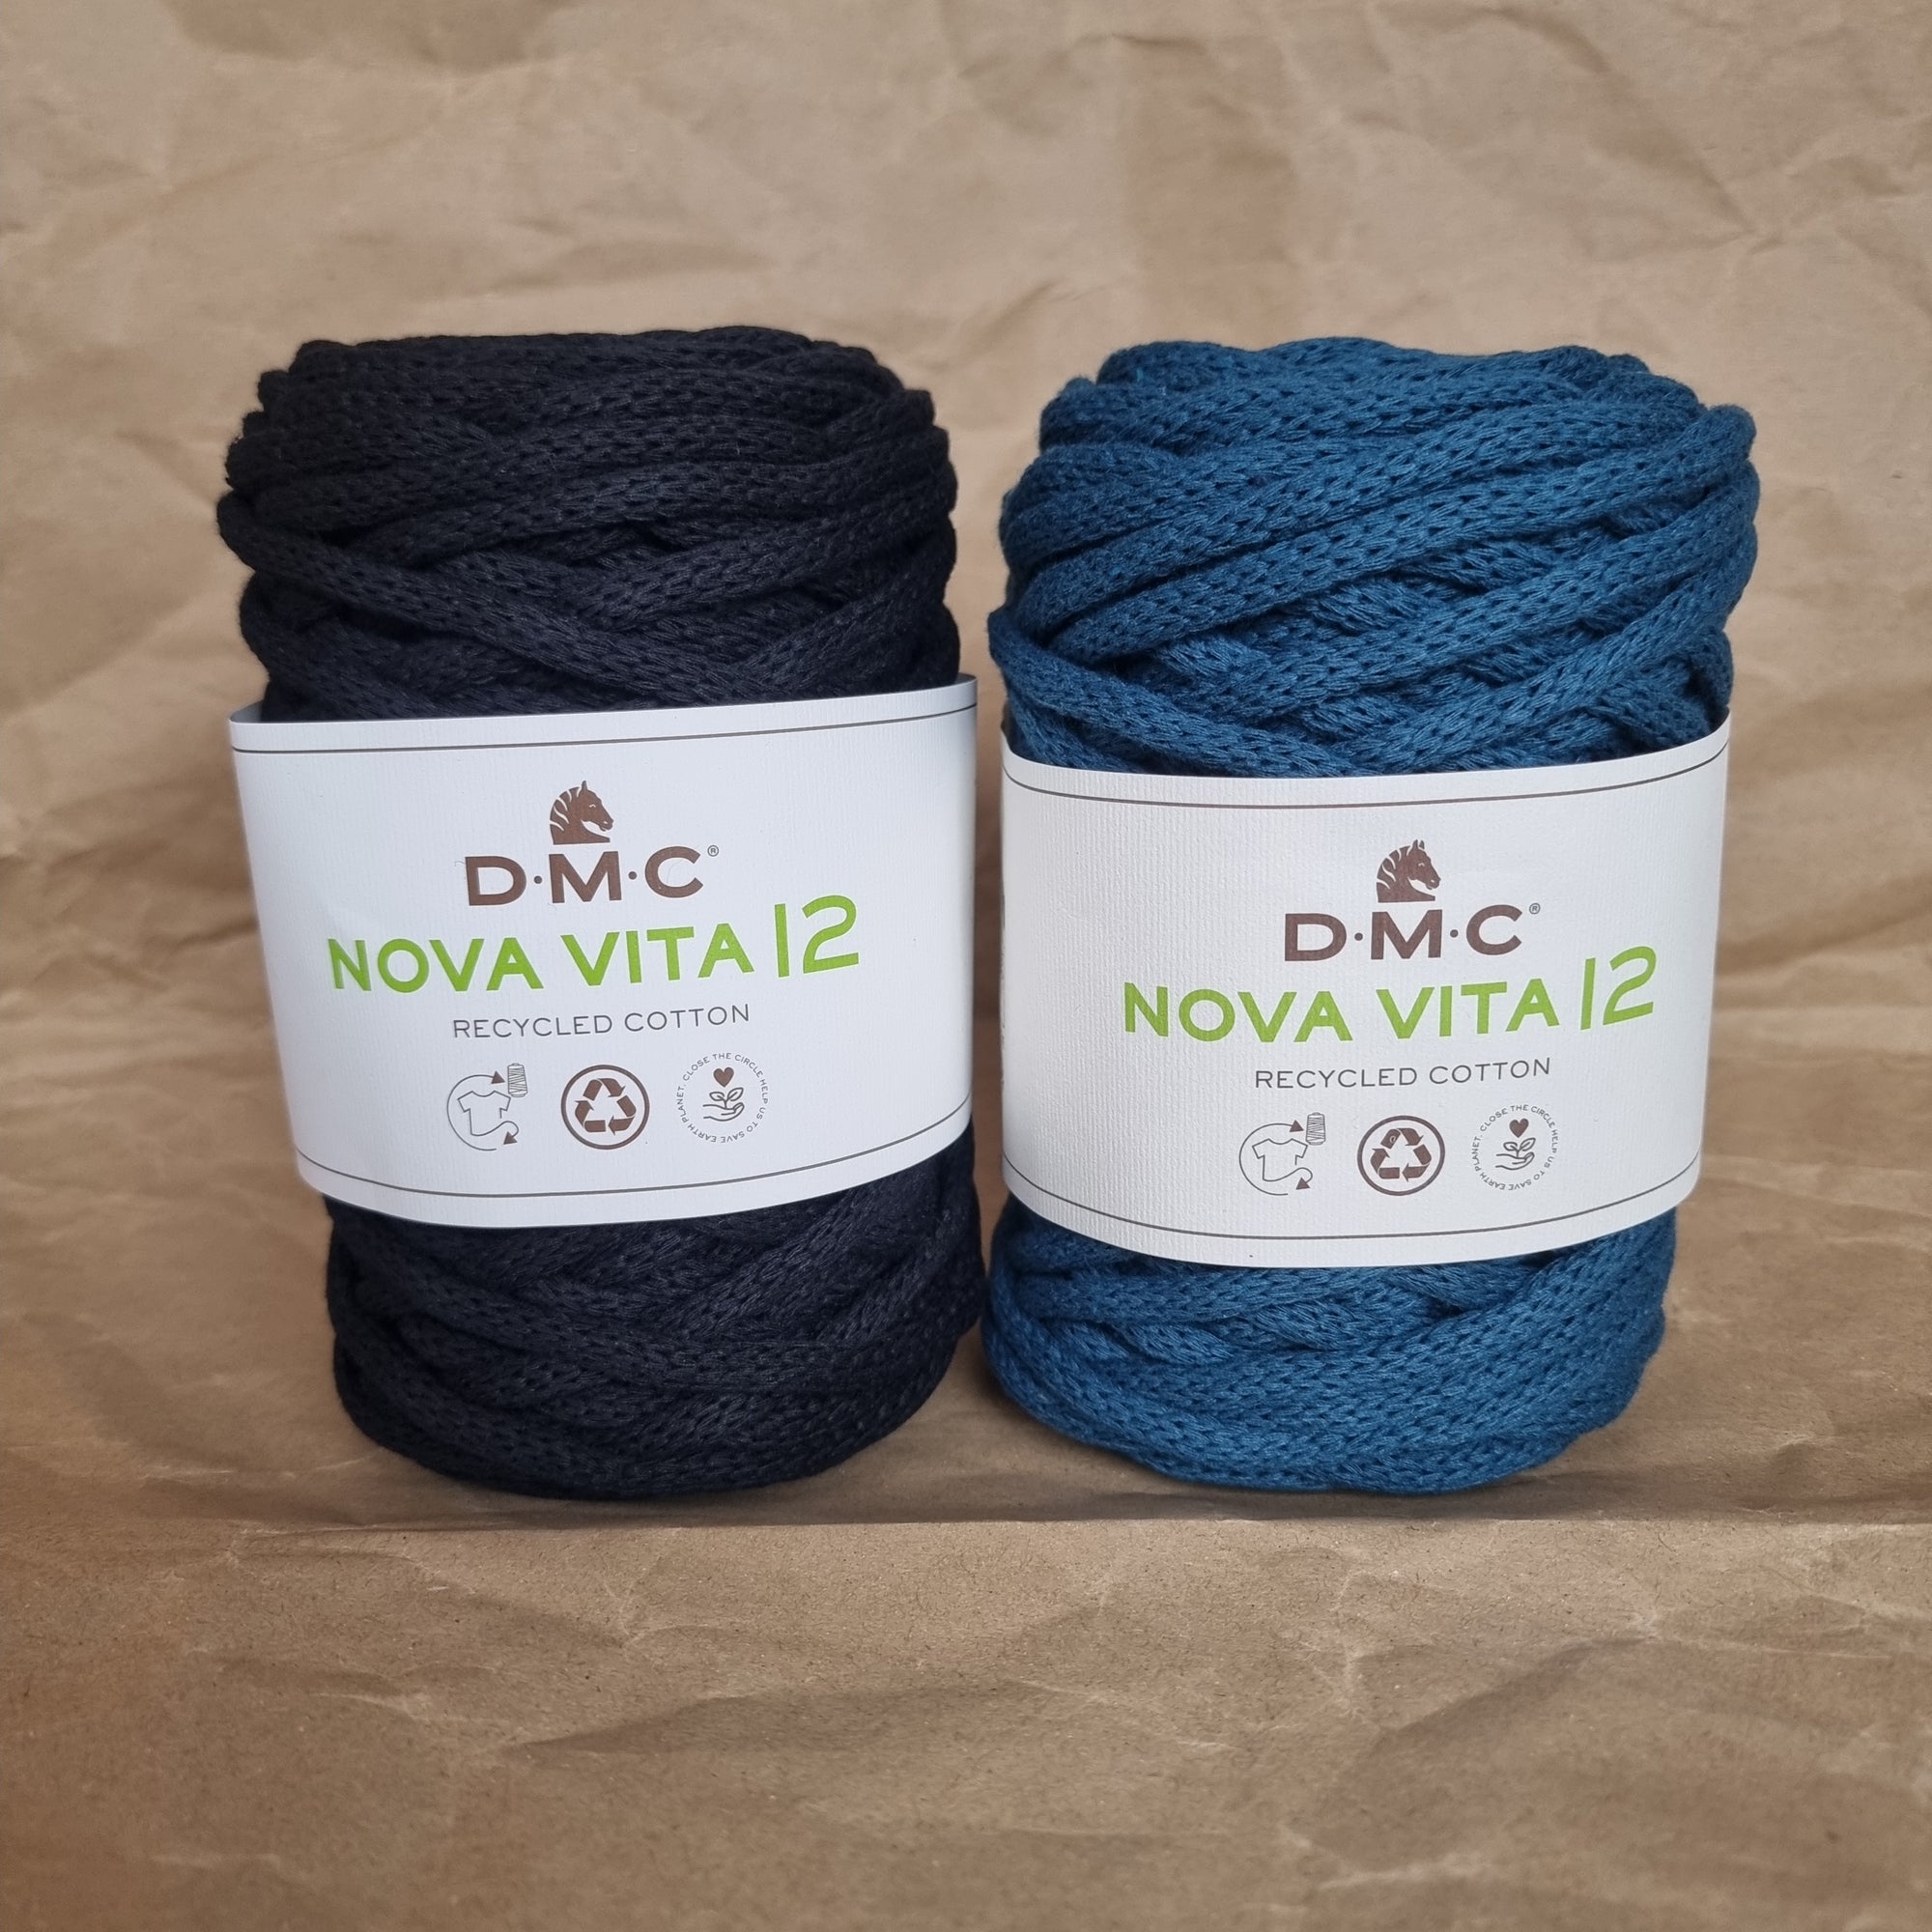 DMC Nova Vita 12 Recycled Cotton Macrame Cord